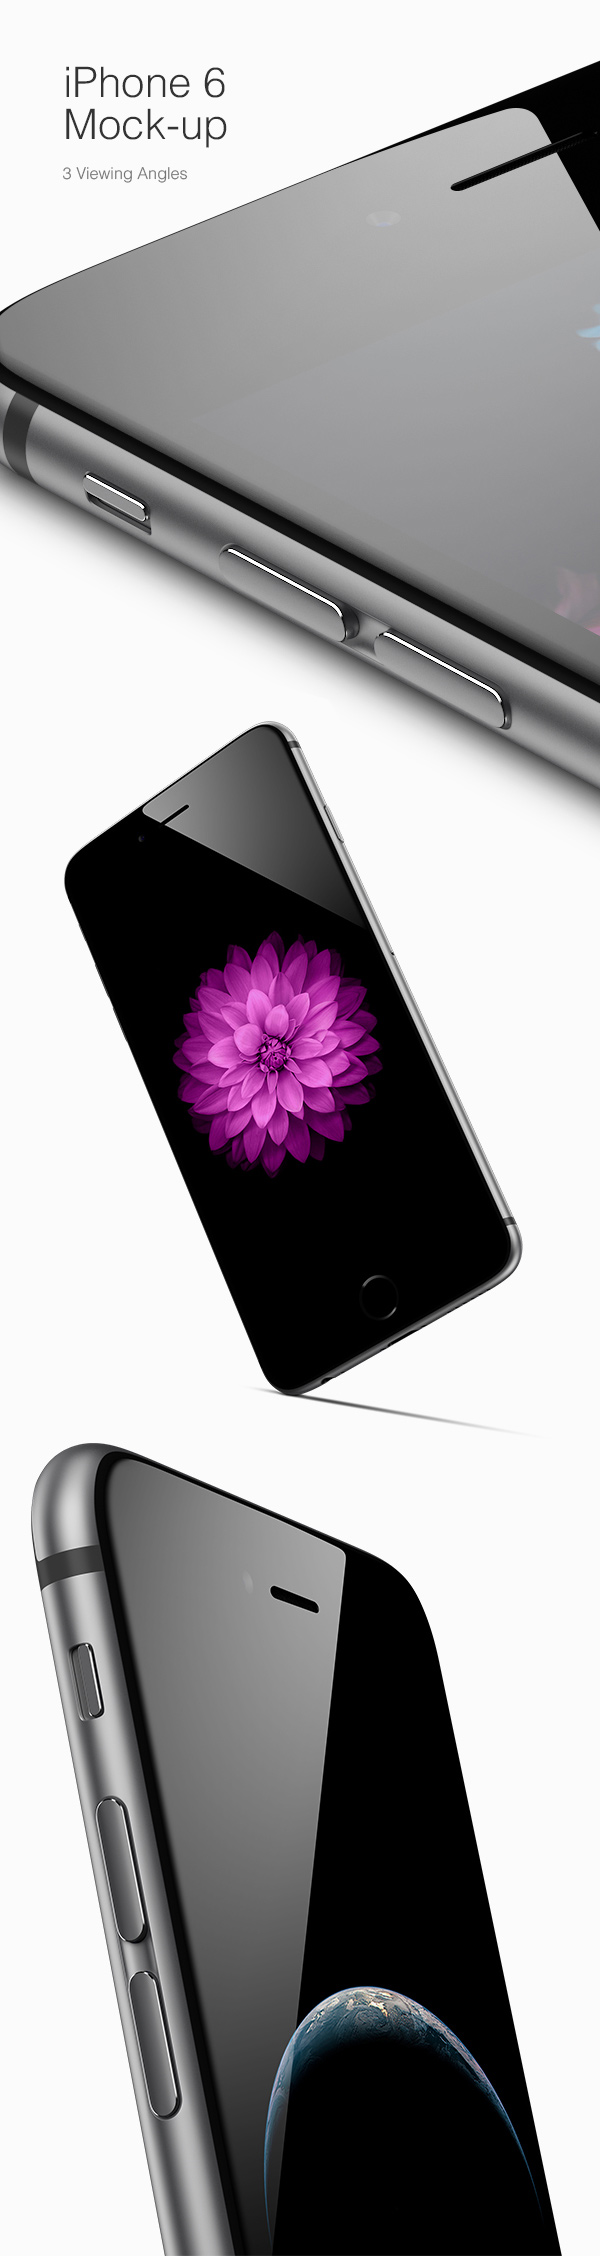 iPhone-6-MockUp-3-Angles